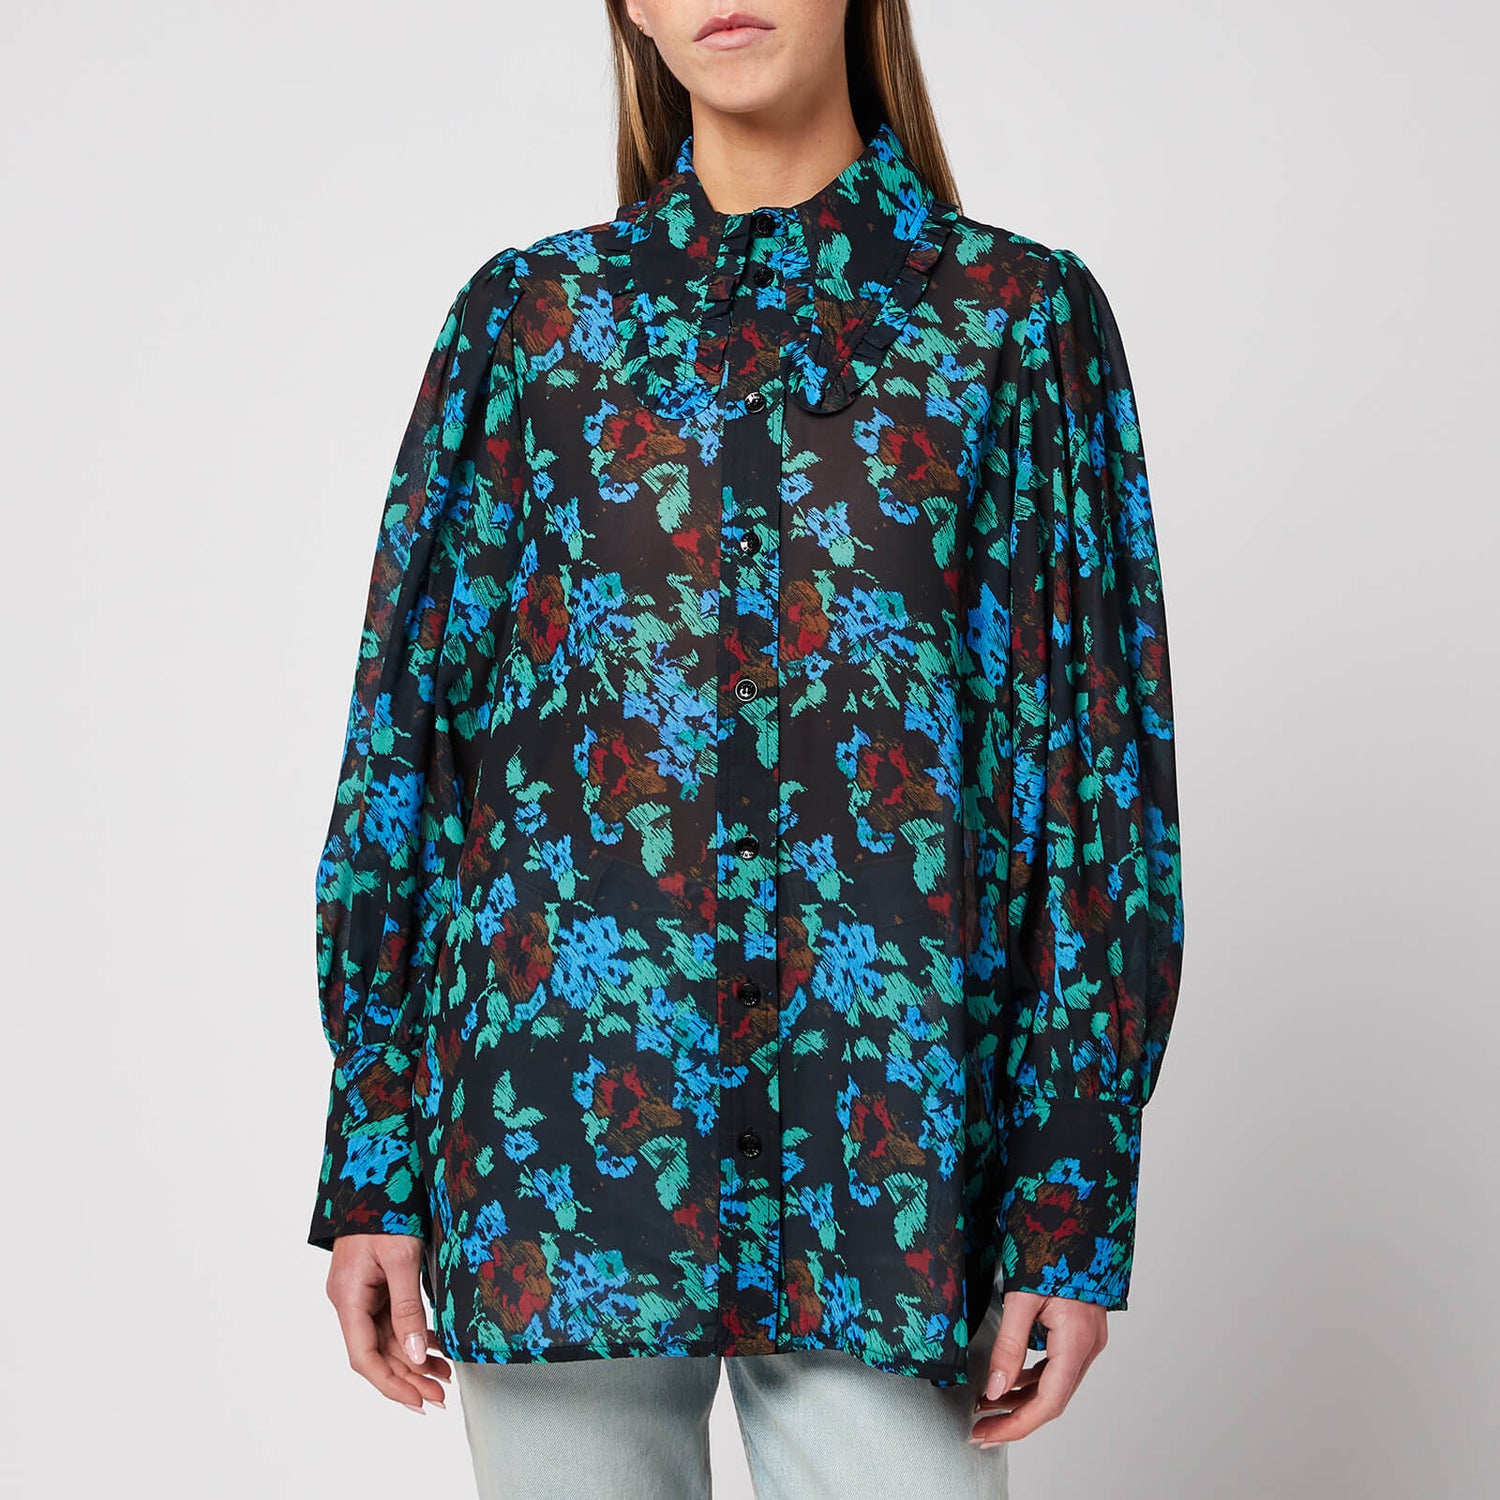 Ganni Women's Printed Light Crepe Shirt - Meadow Azure Blue - EU 34/UK 6